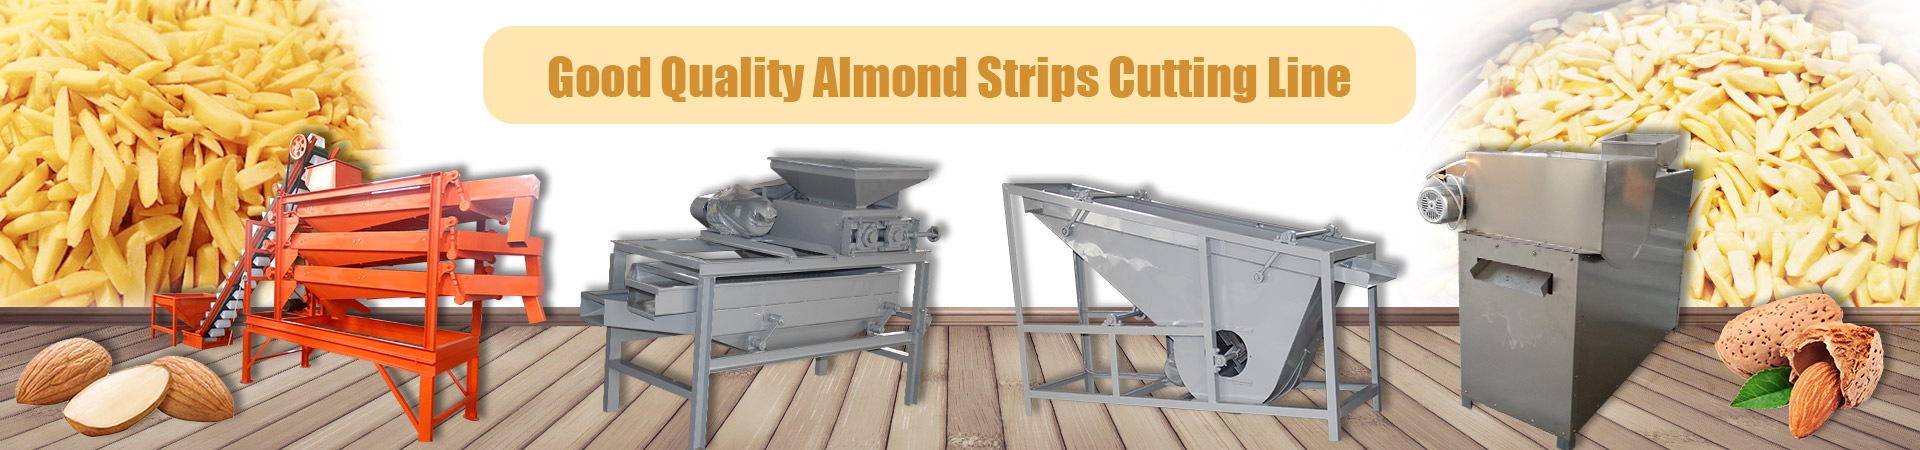 Good Quality Almond Strips Cutting Line